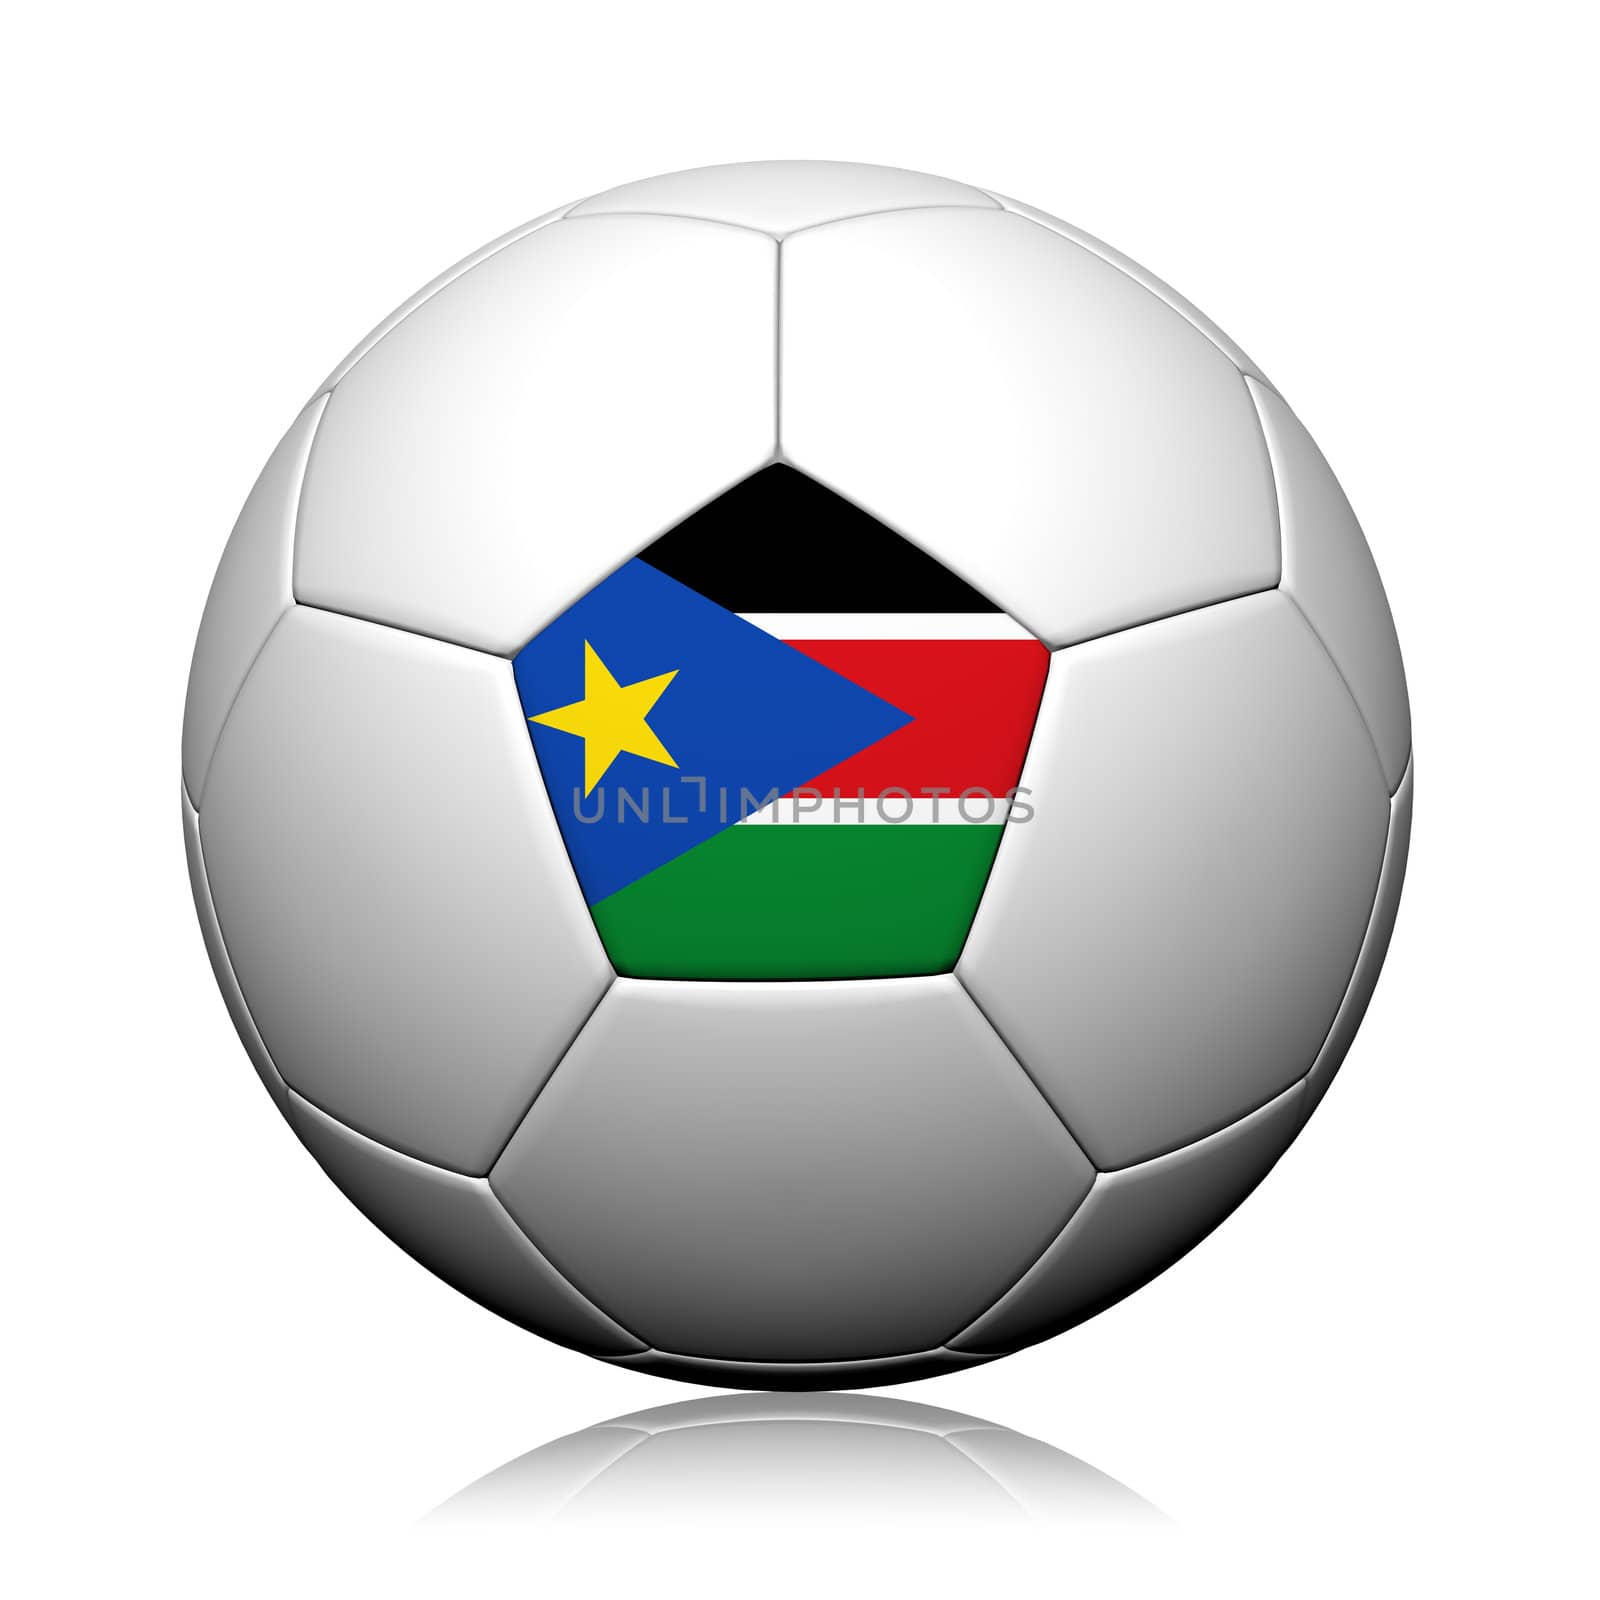 Sudan Flag Pattern 3d rendering of a soccer ball by jakgree